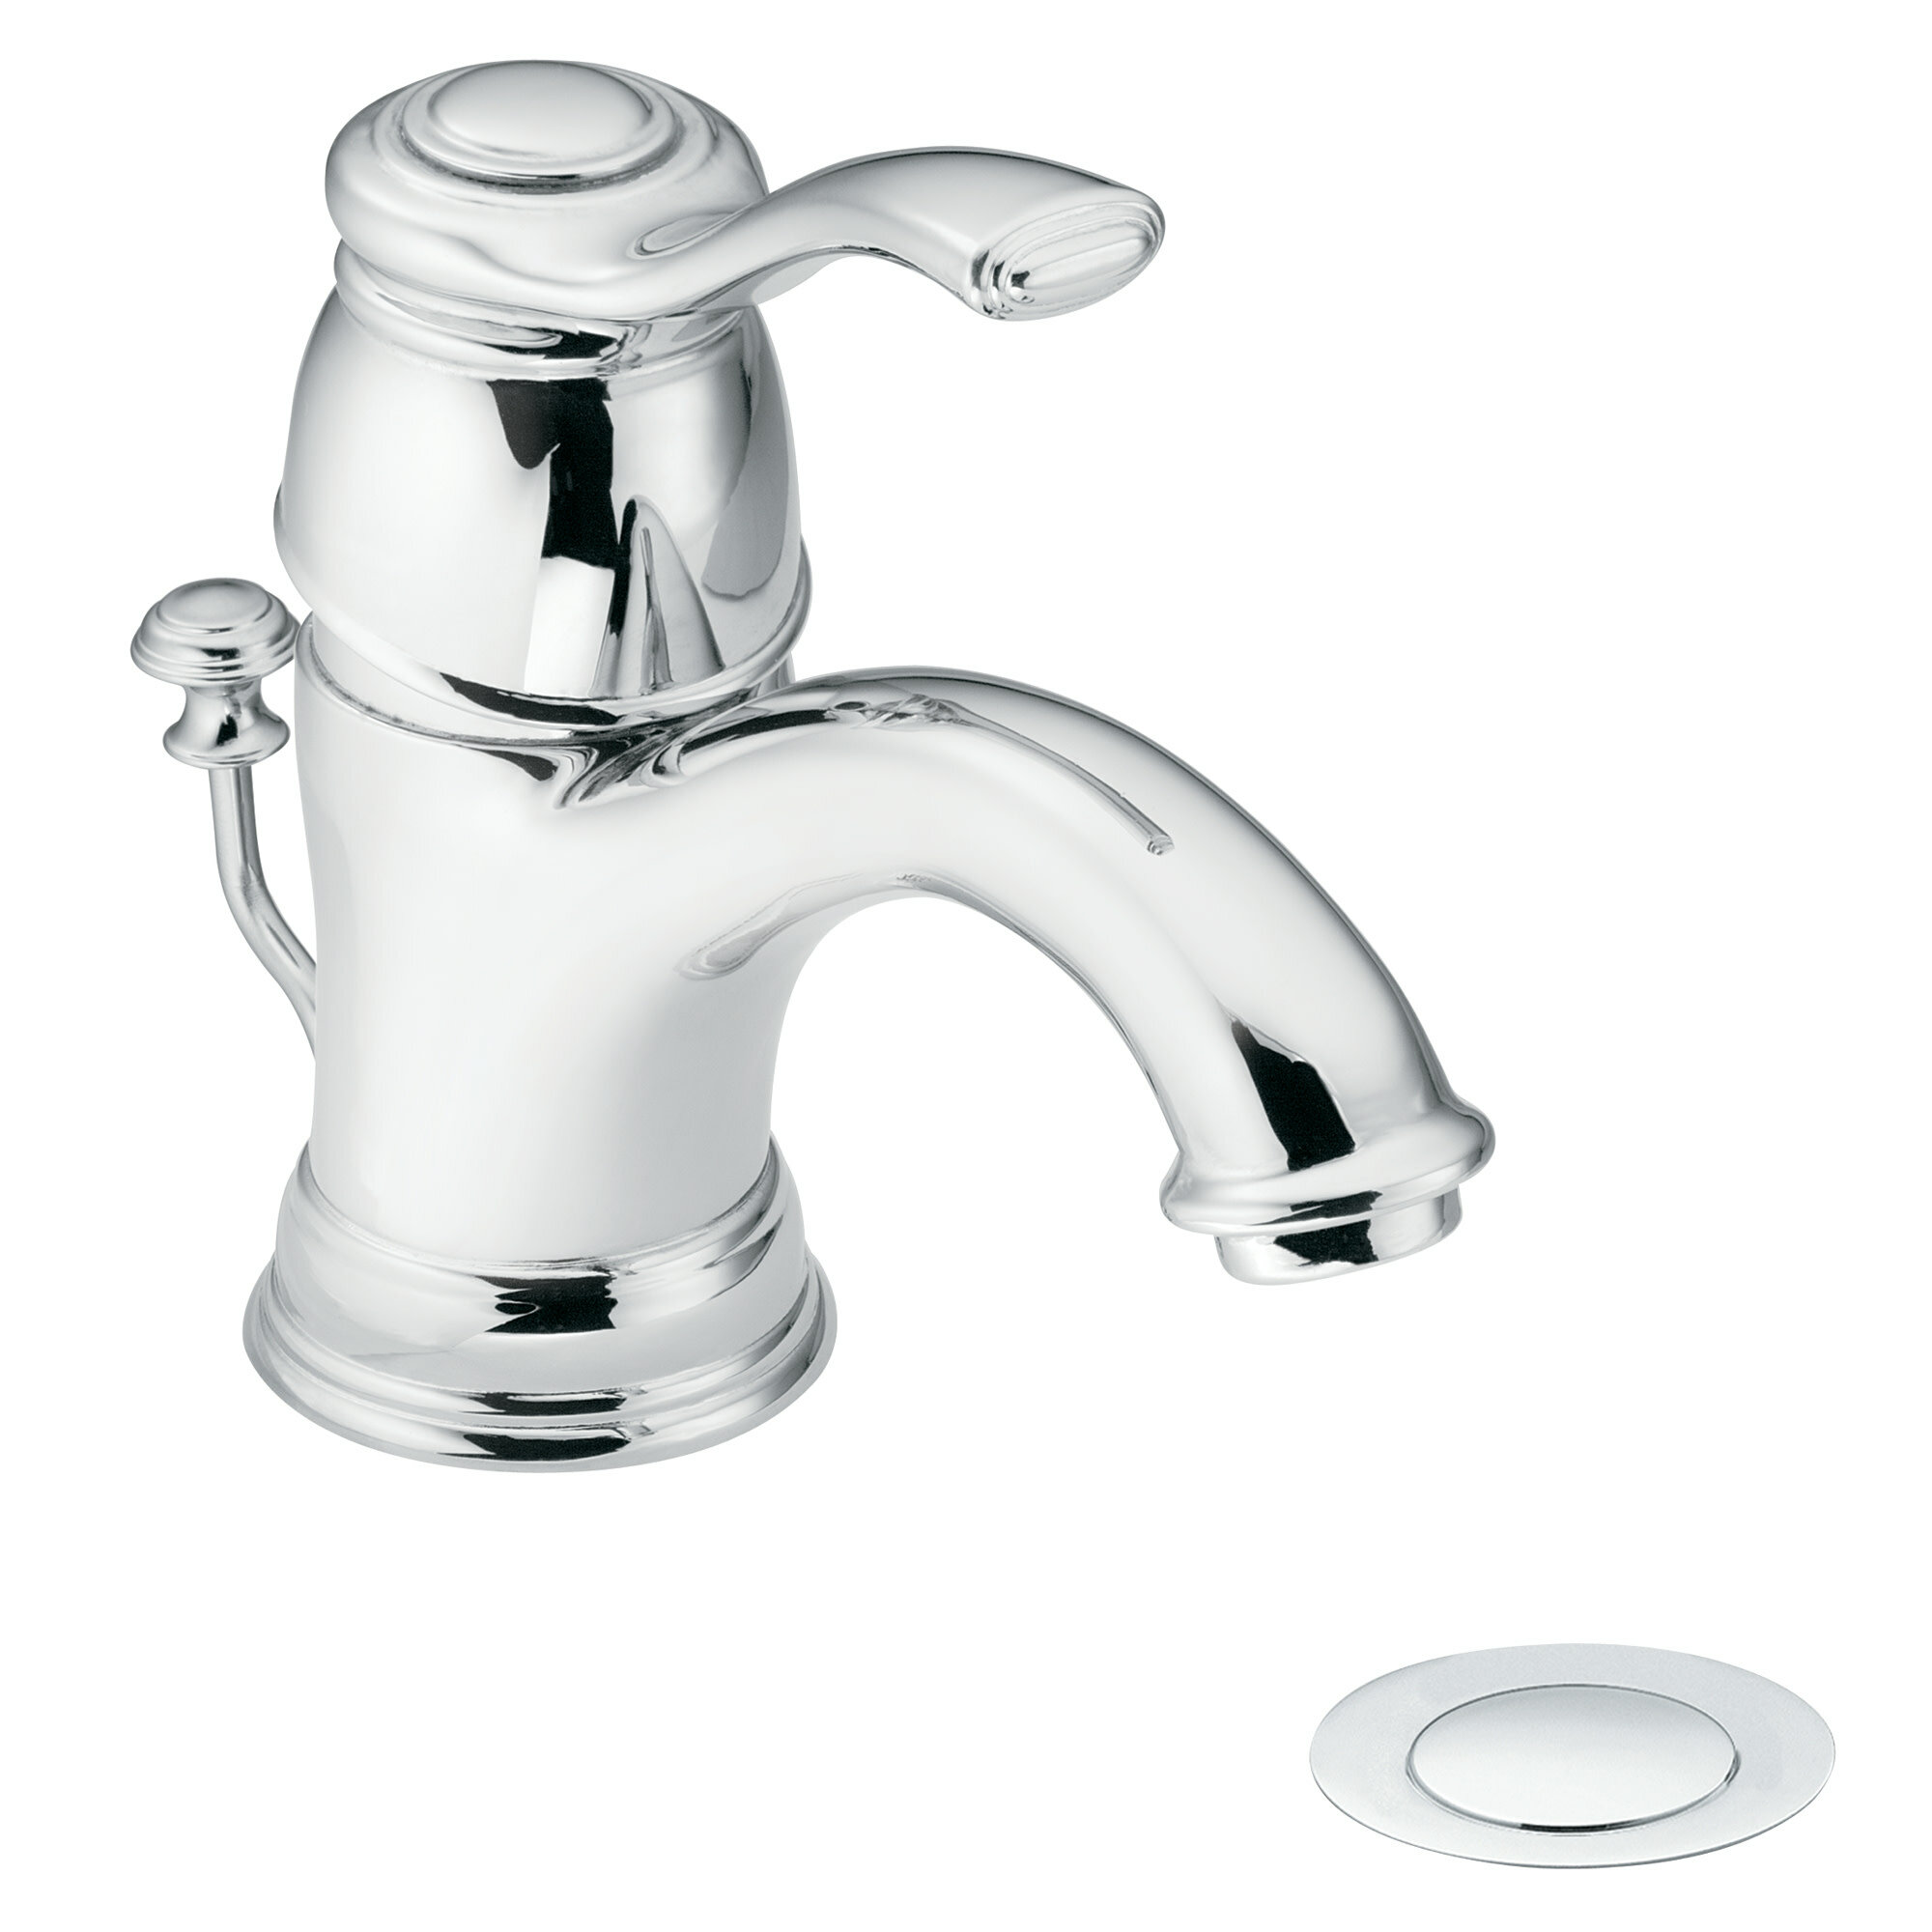 6102wr P Moen Kingsley Single Hole Bathroom Faucet With Drain